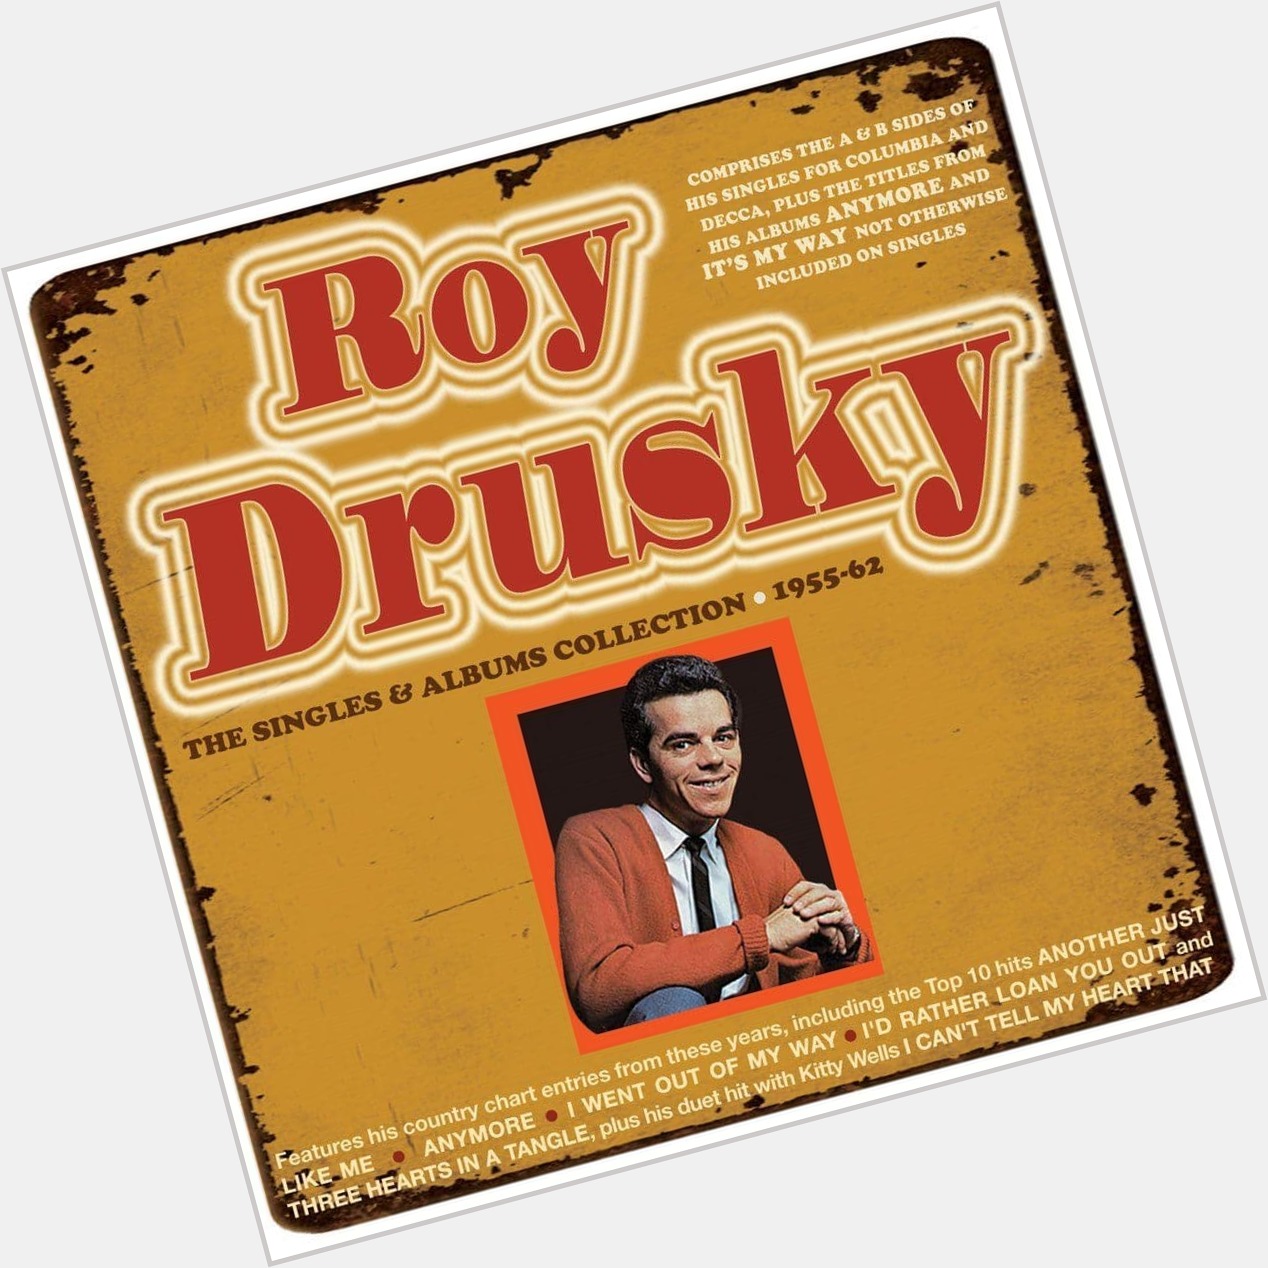 Roy Drusky man crush 3